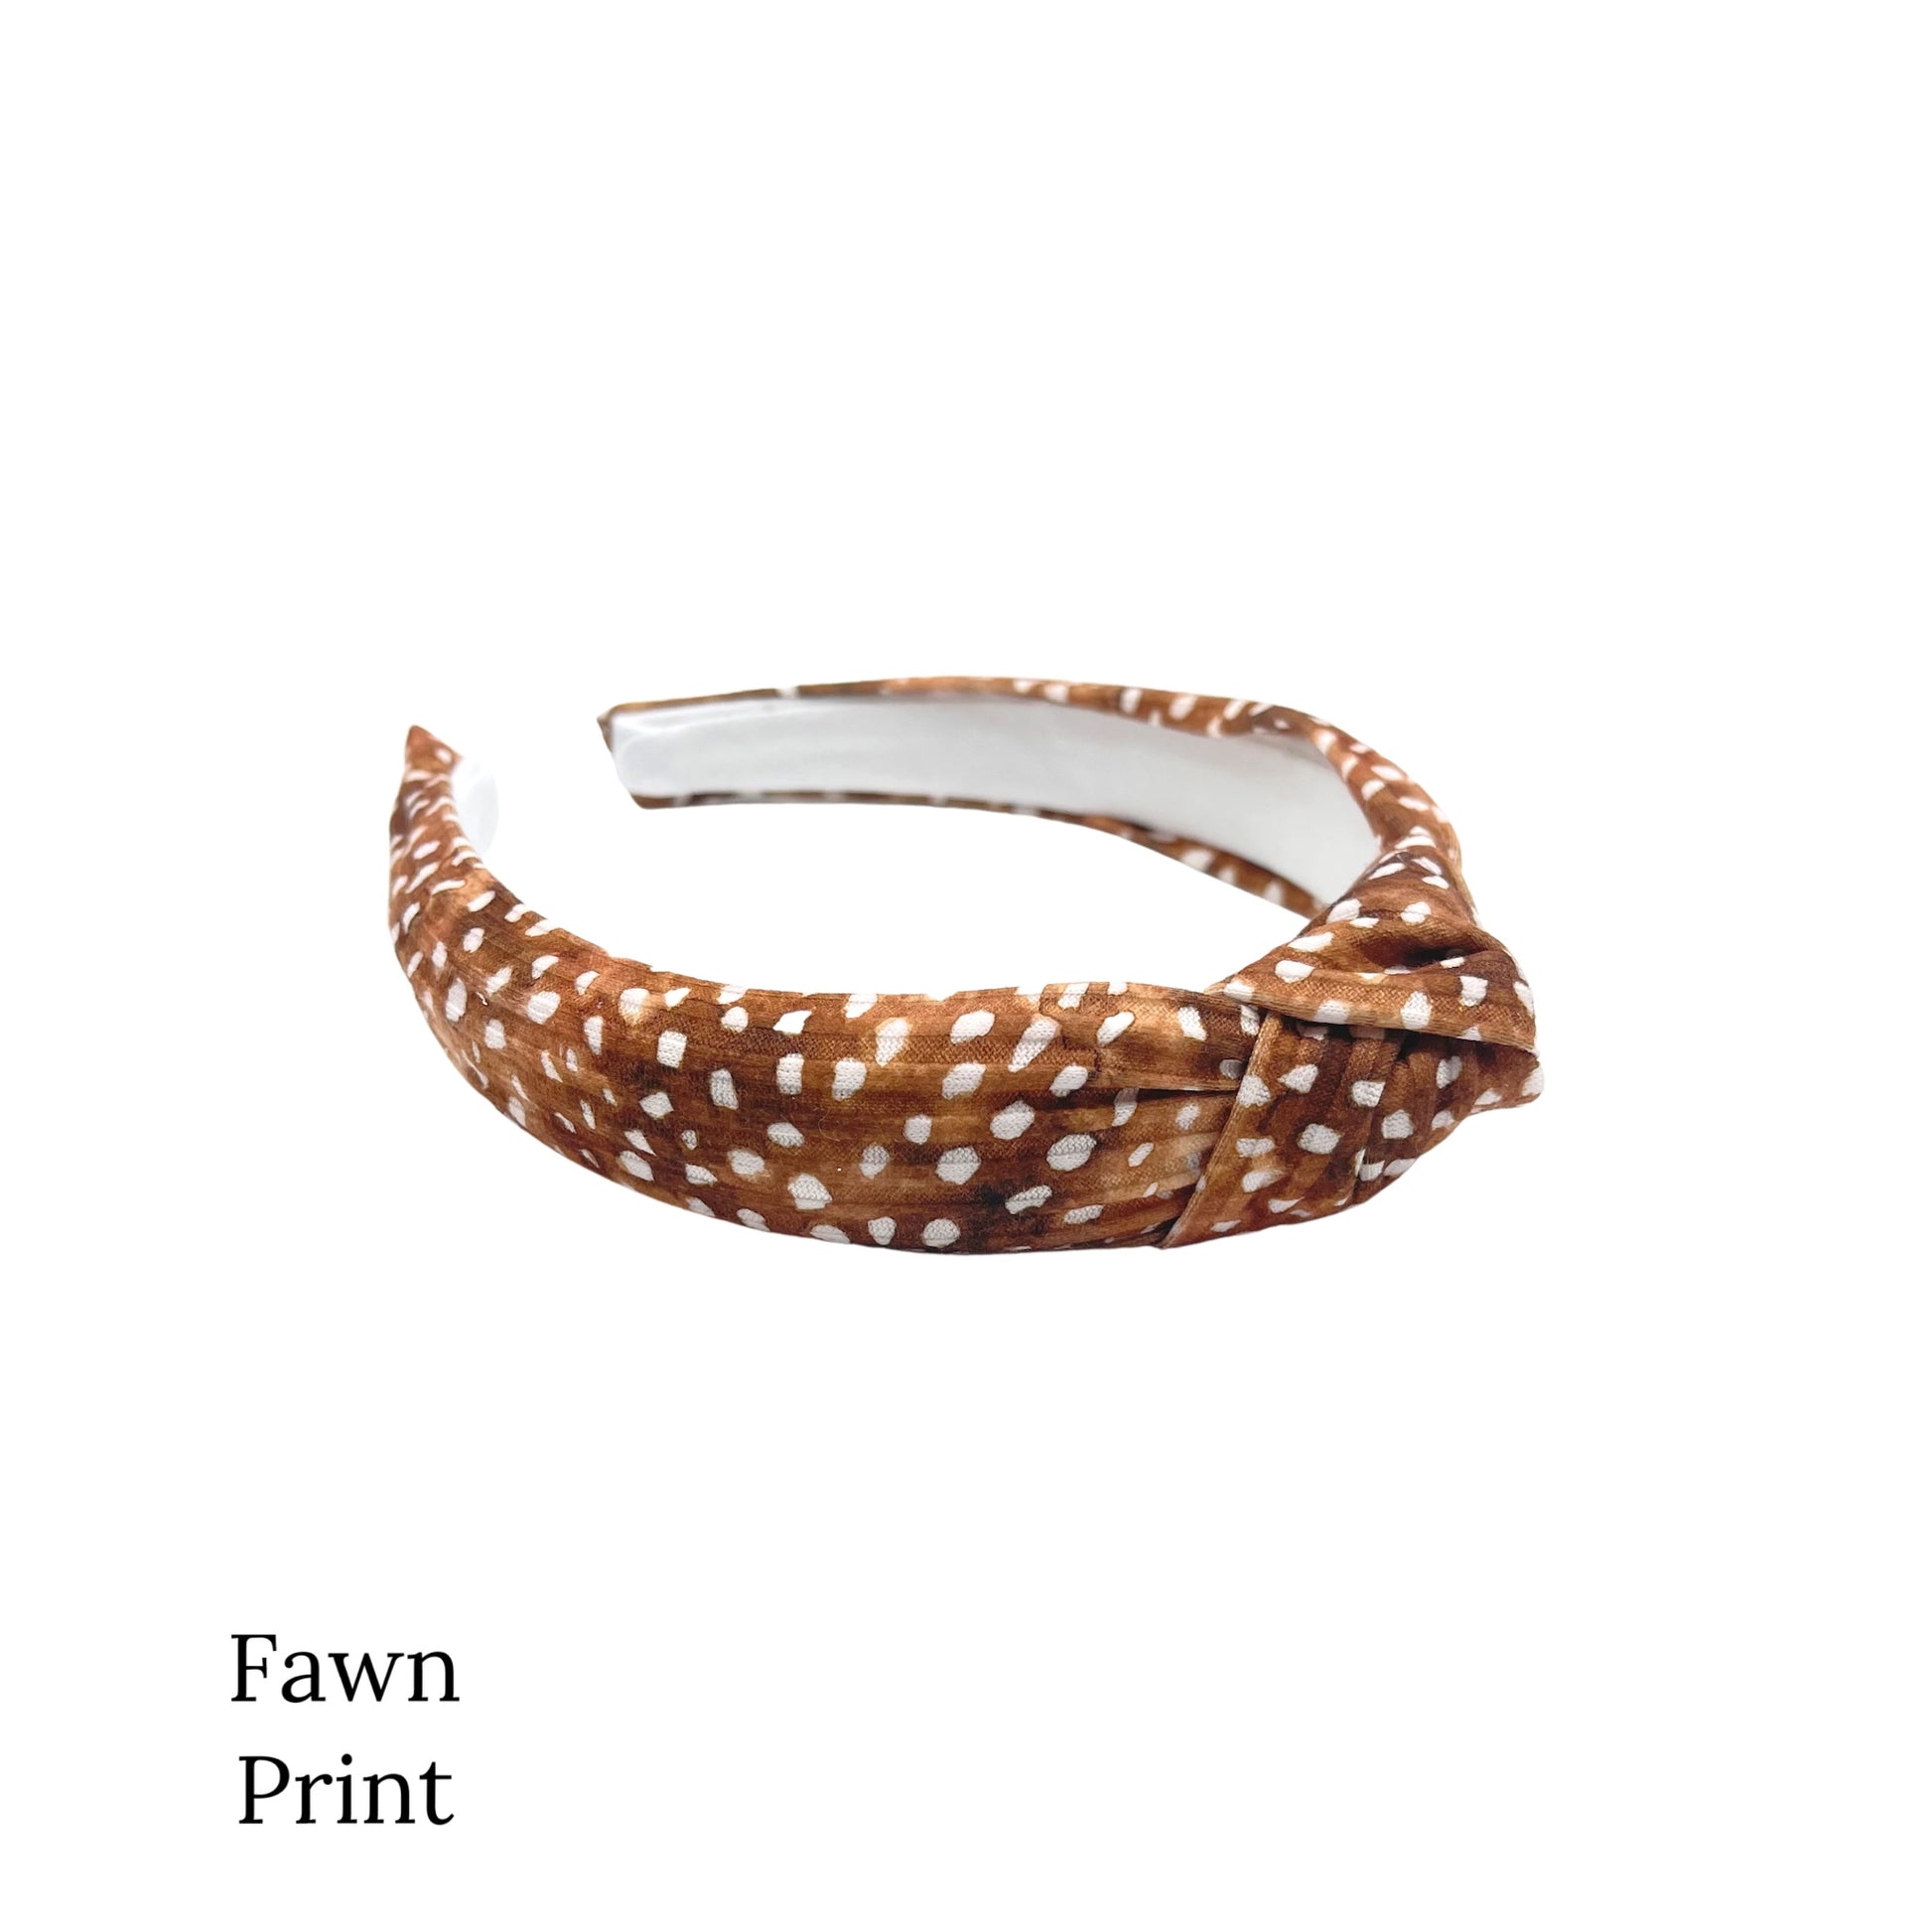 Farm animals knotted headbands. Fawn print patterned headband. 